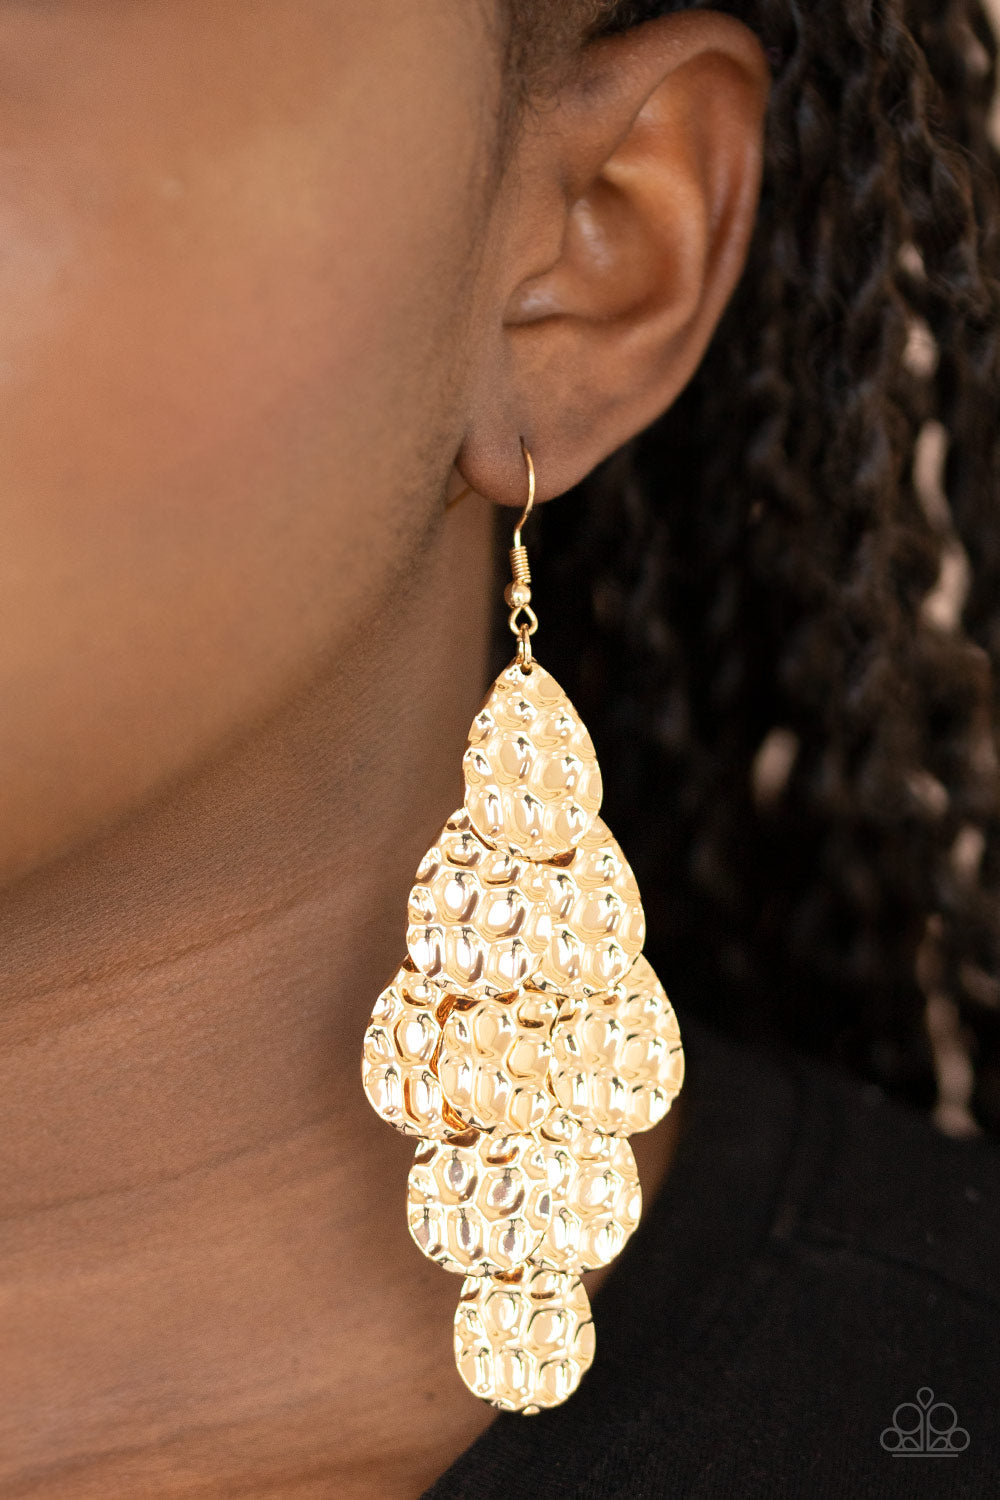 Earrings, Sensitive Ears, Sensitive Skin, Hypoallergenic Jewelry, gold, hammered metal